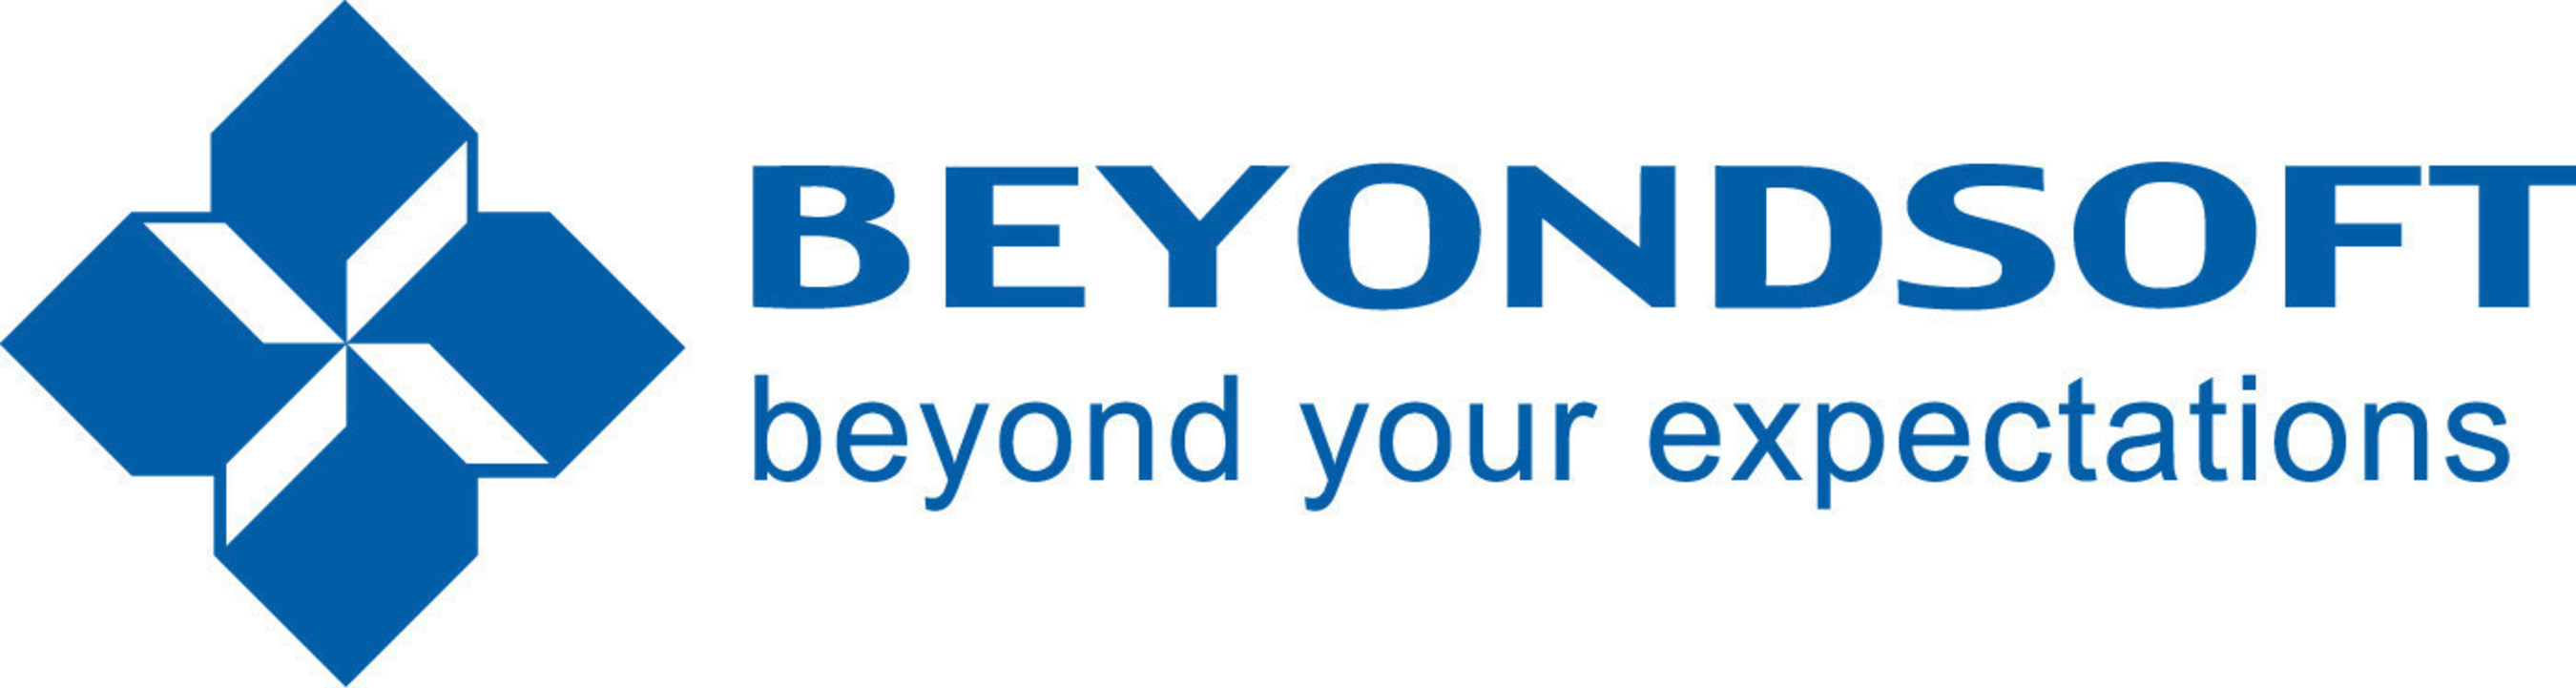 www.Beyondsoft.com